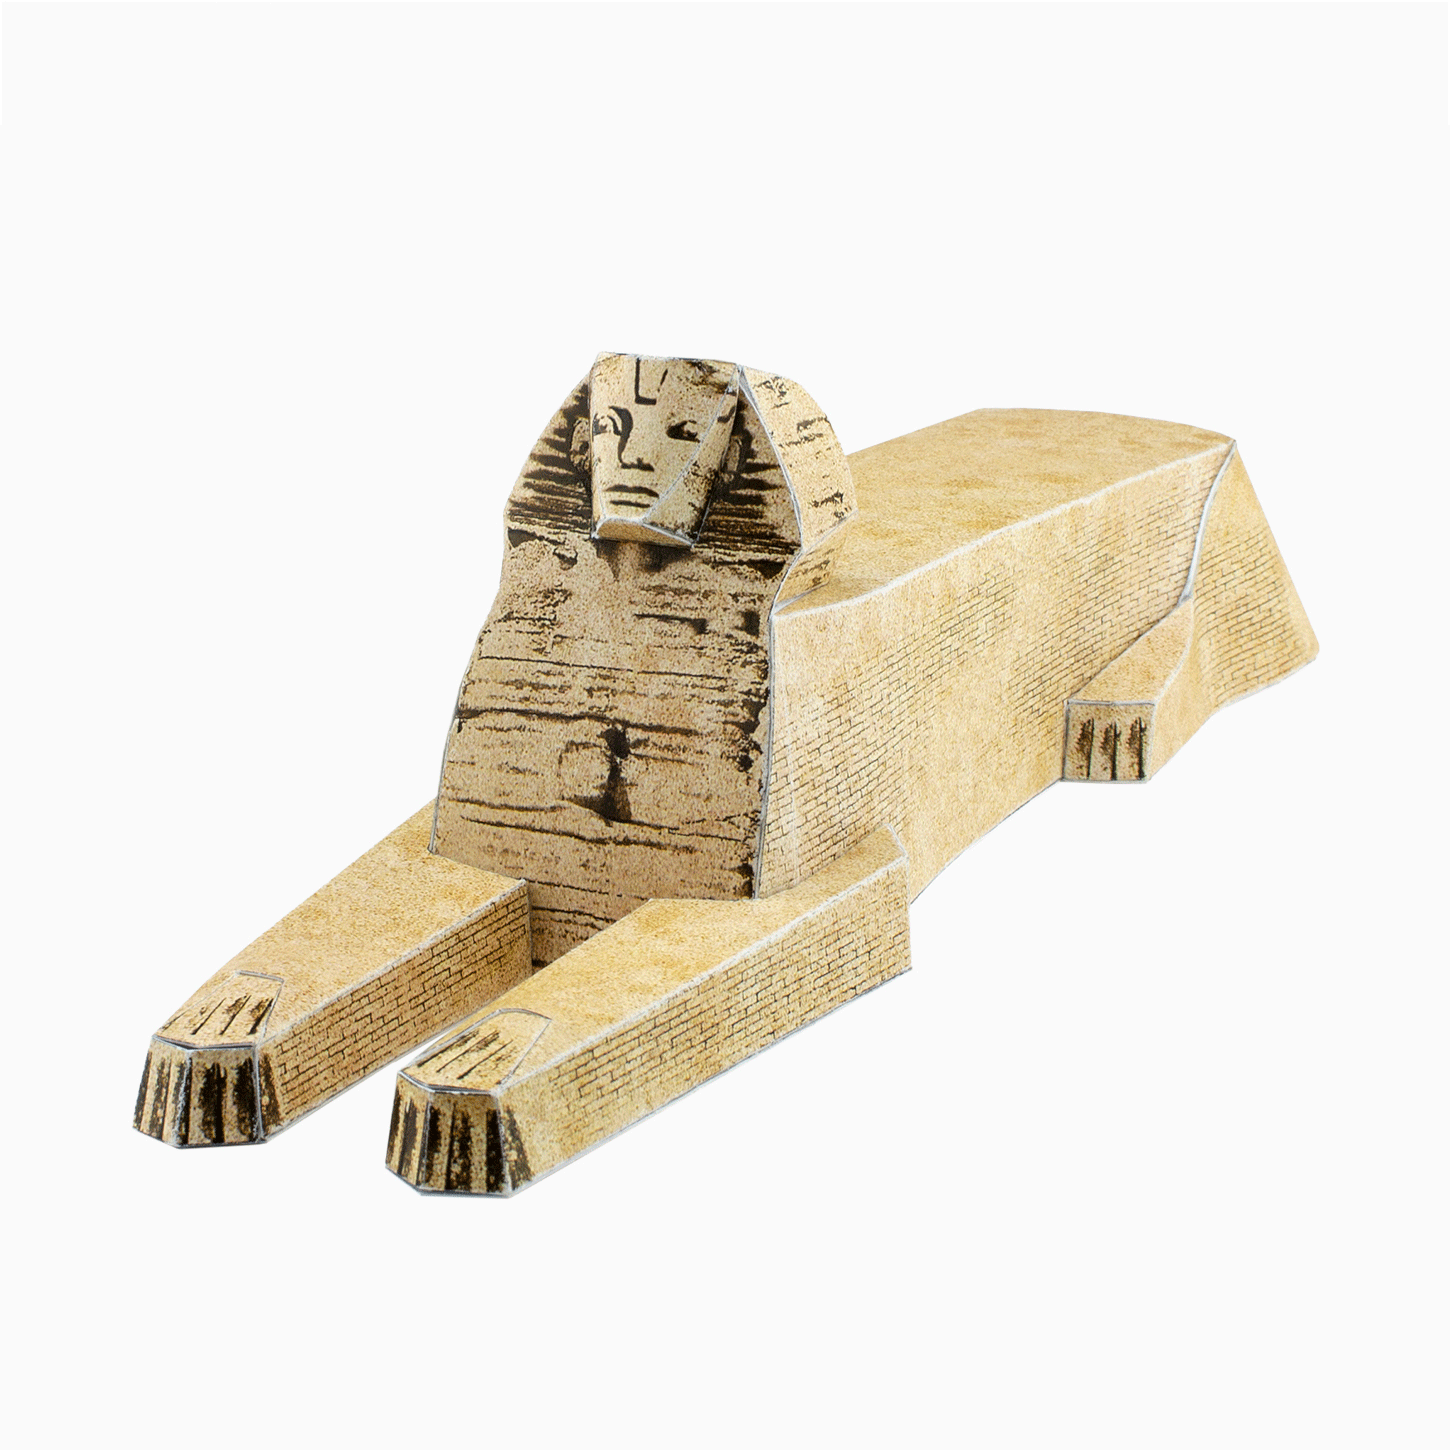 Sphinx Paper Model by PaperLandmarks Assembled 